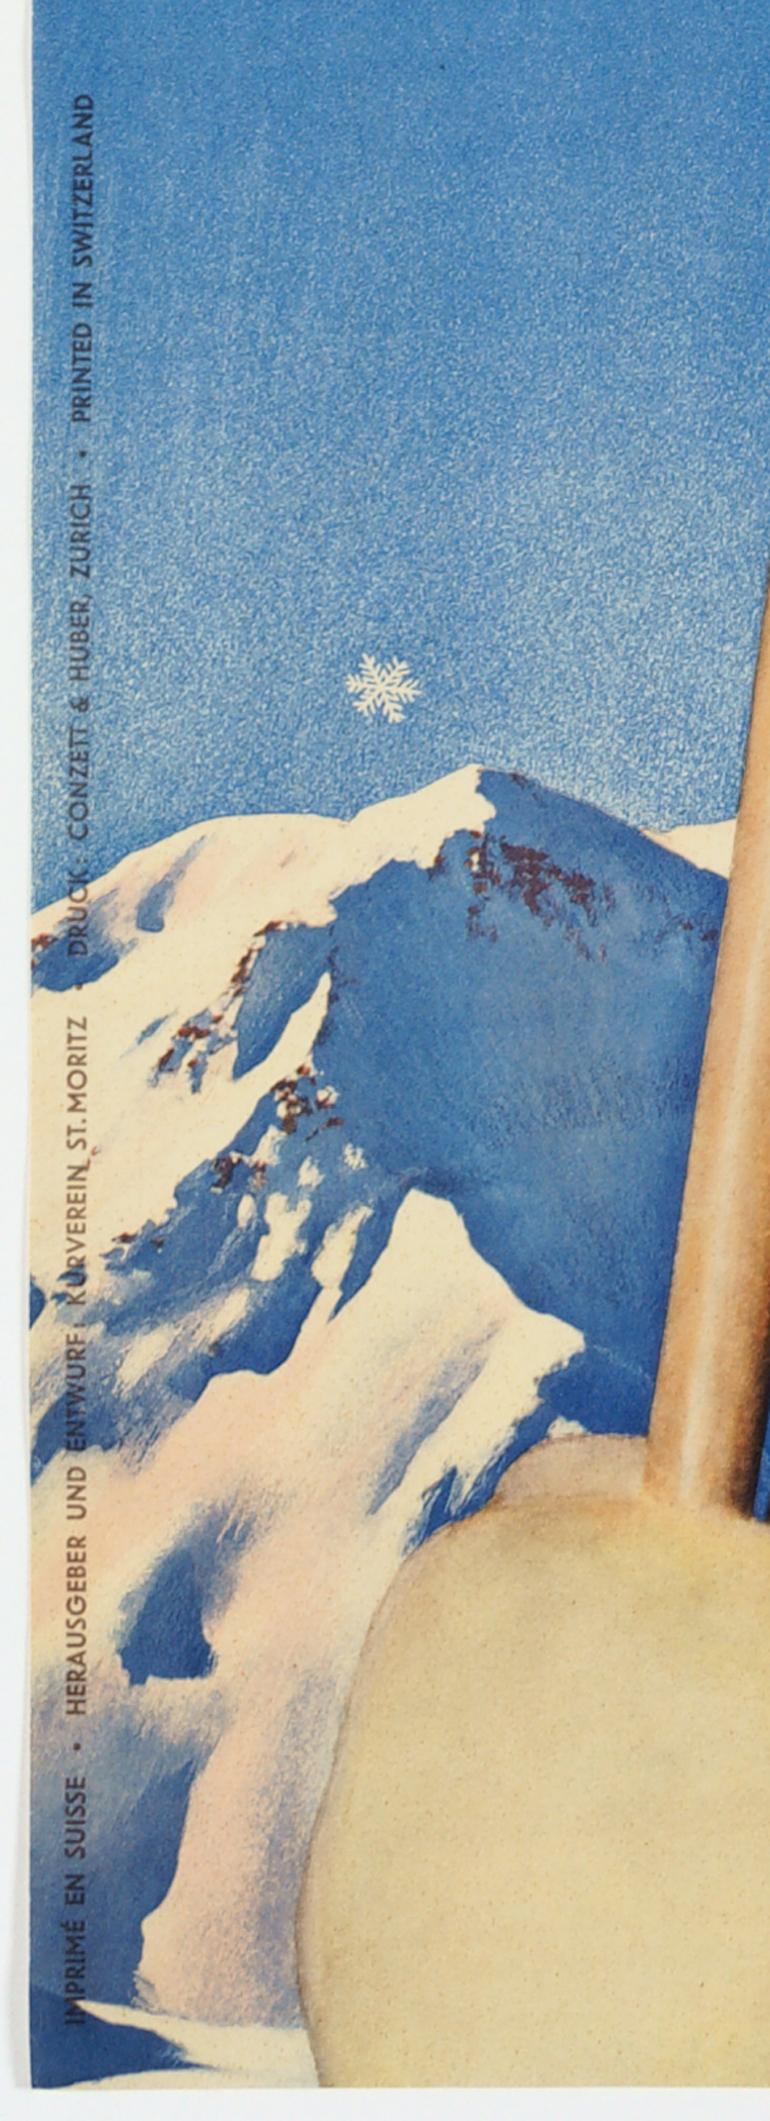 St. Moritz – Original Swiss Winter Poster - Modern Print by Walter Herdeg